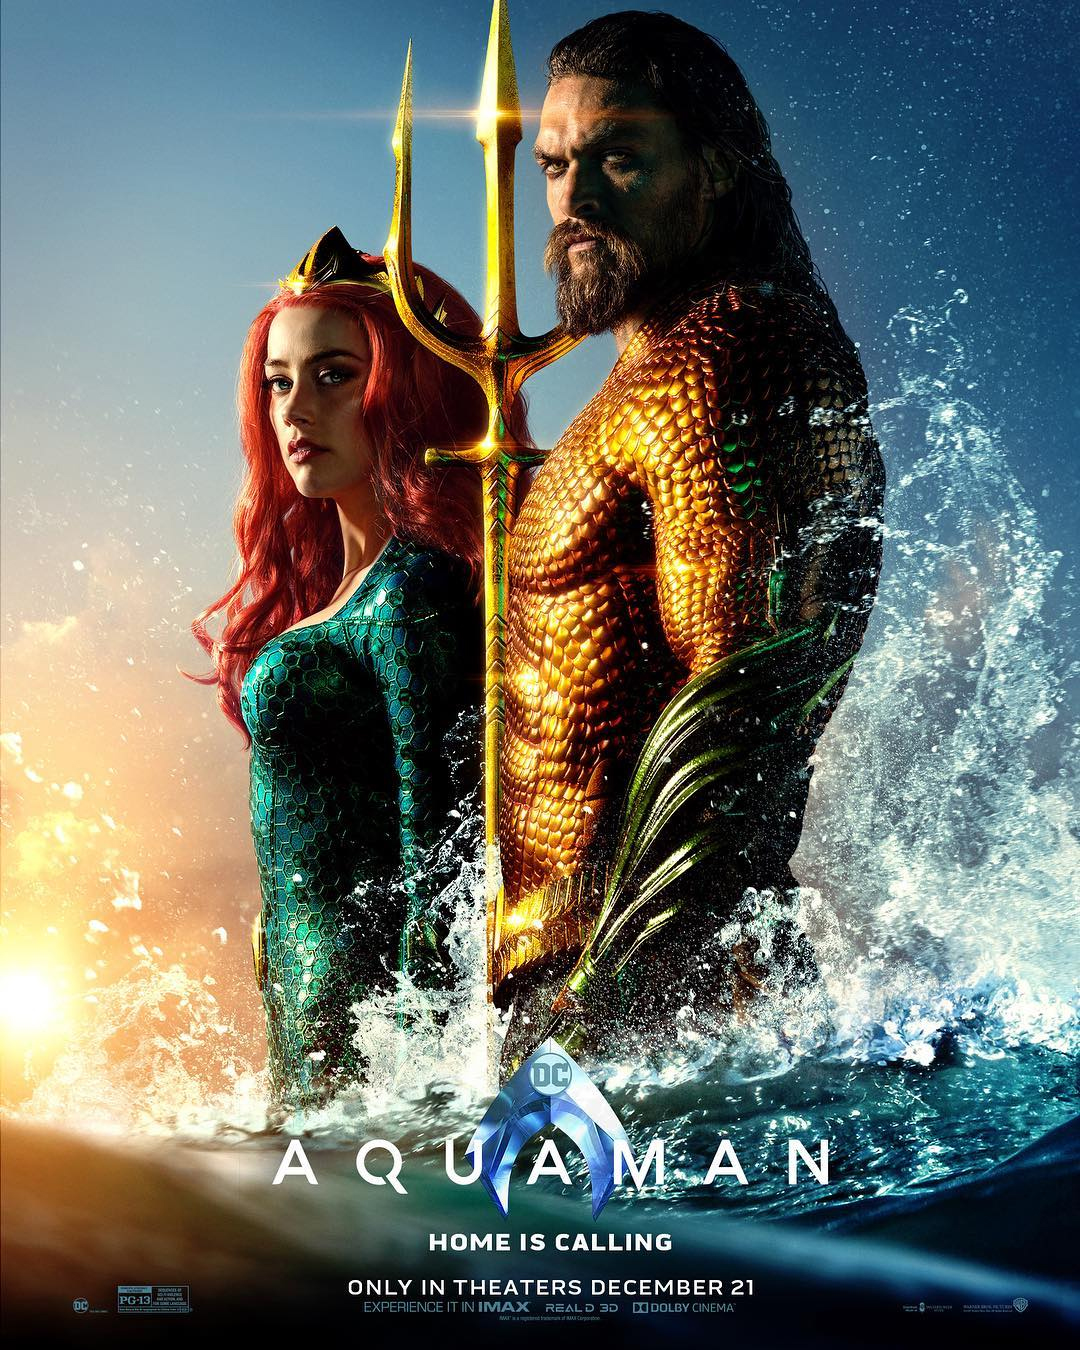 Aquaman (2018) Poster DCEU DC extended universe Photo (41671607